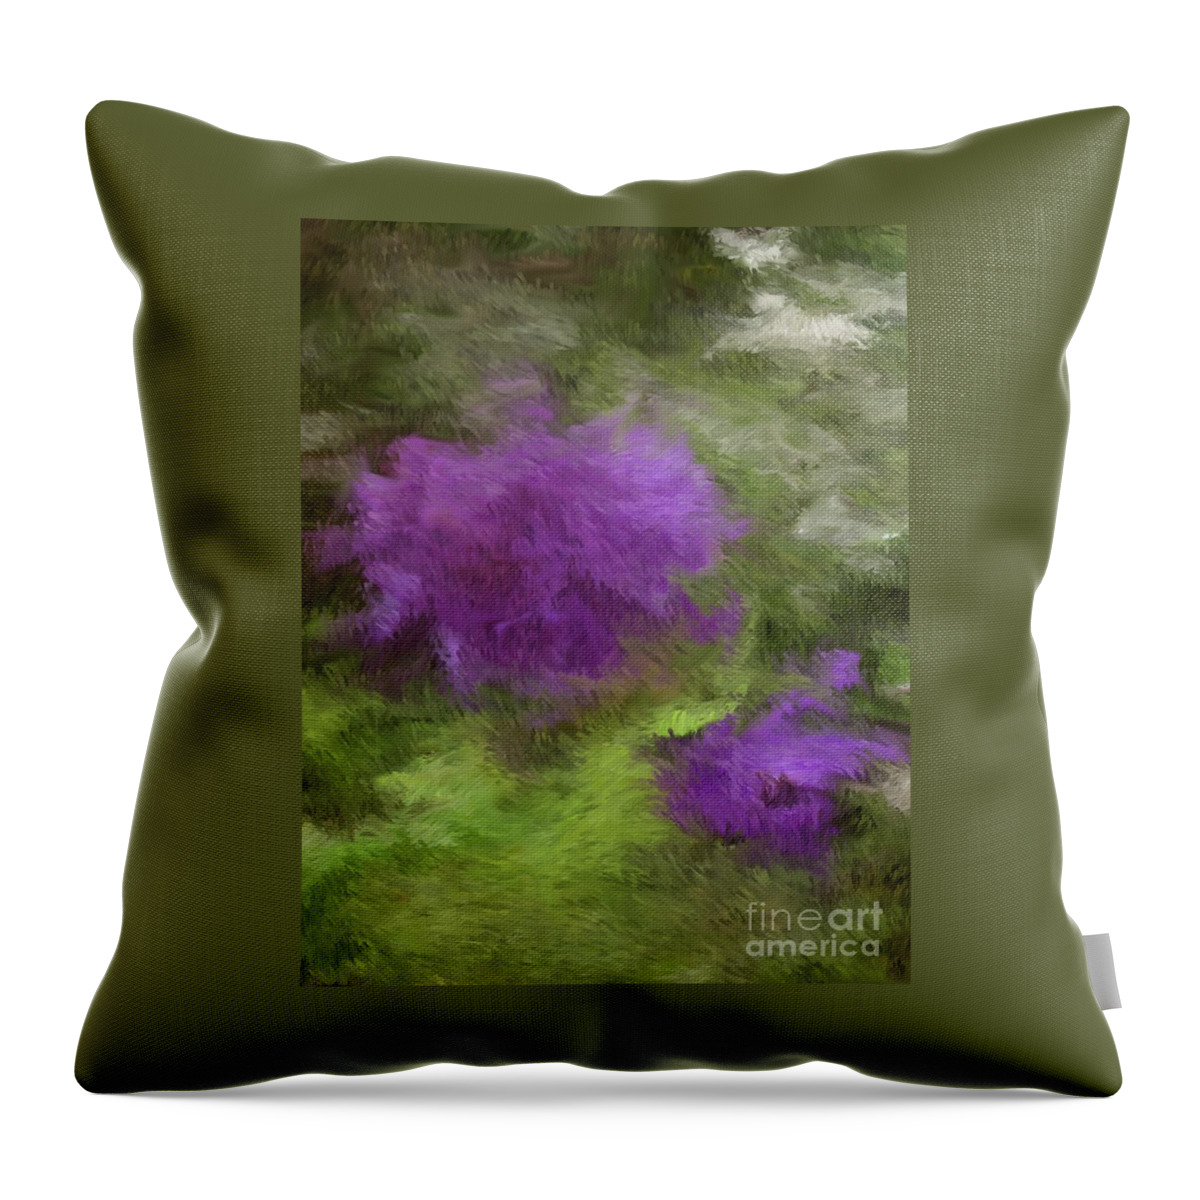 Digital Art Throw Pillow featuring the digital art Monet Meadow by Alice Terrill